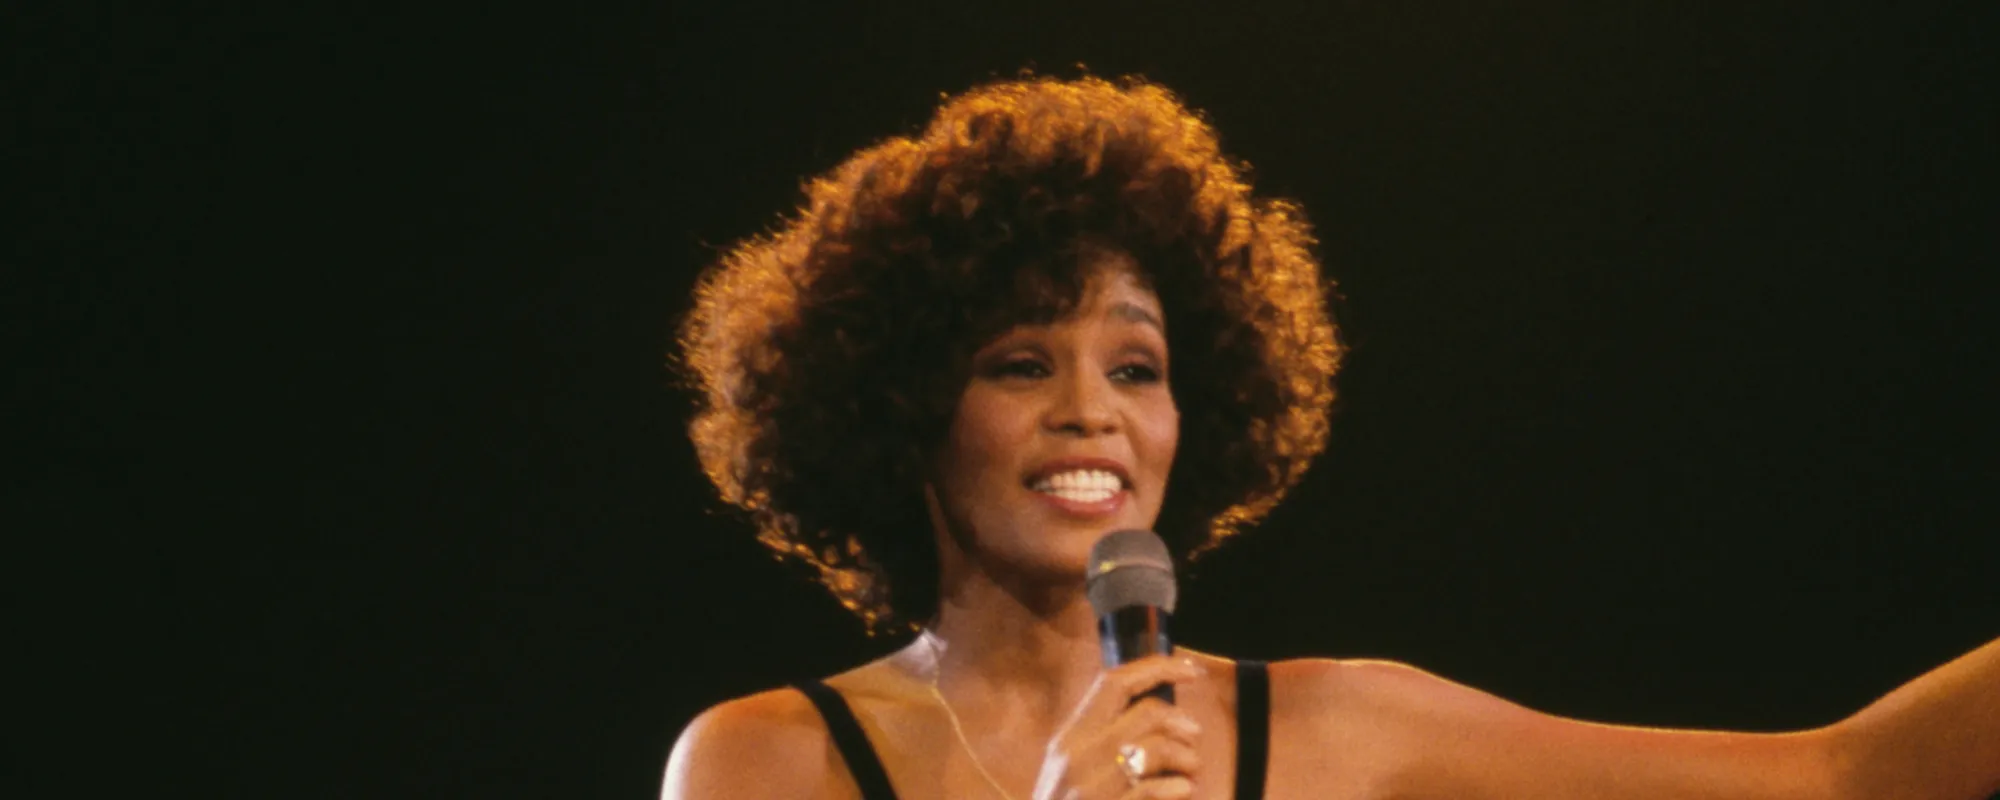 Listen to the Never-Before-Heard Whitney Houston Gospel Song, “He Can Use Me”